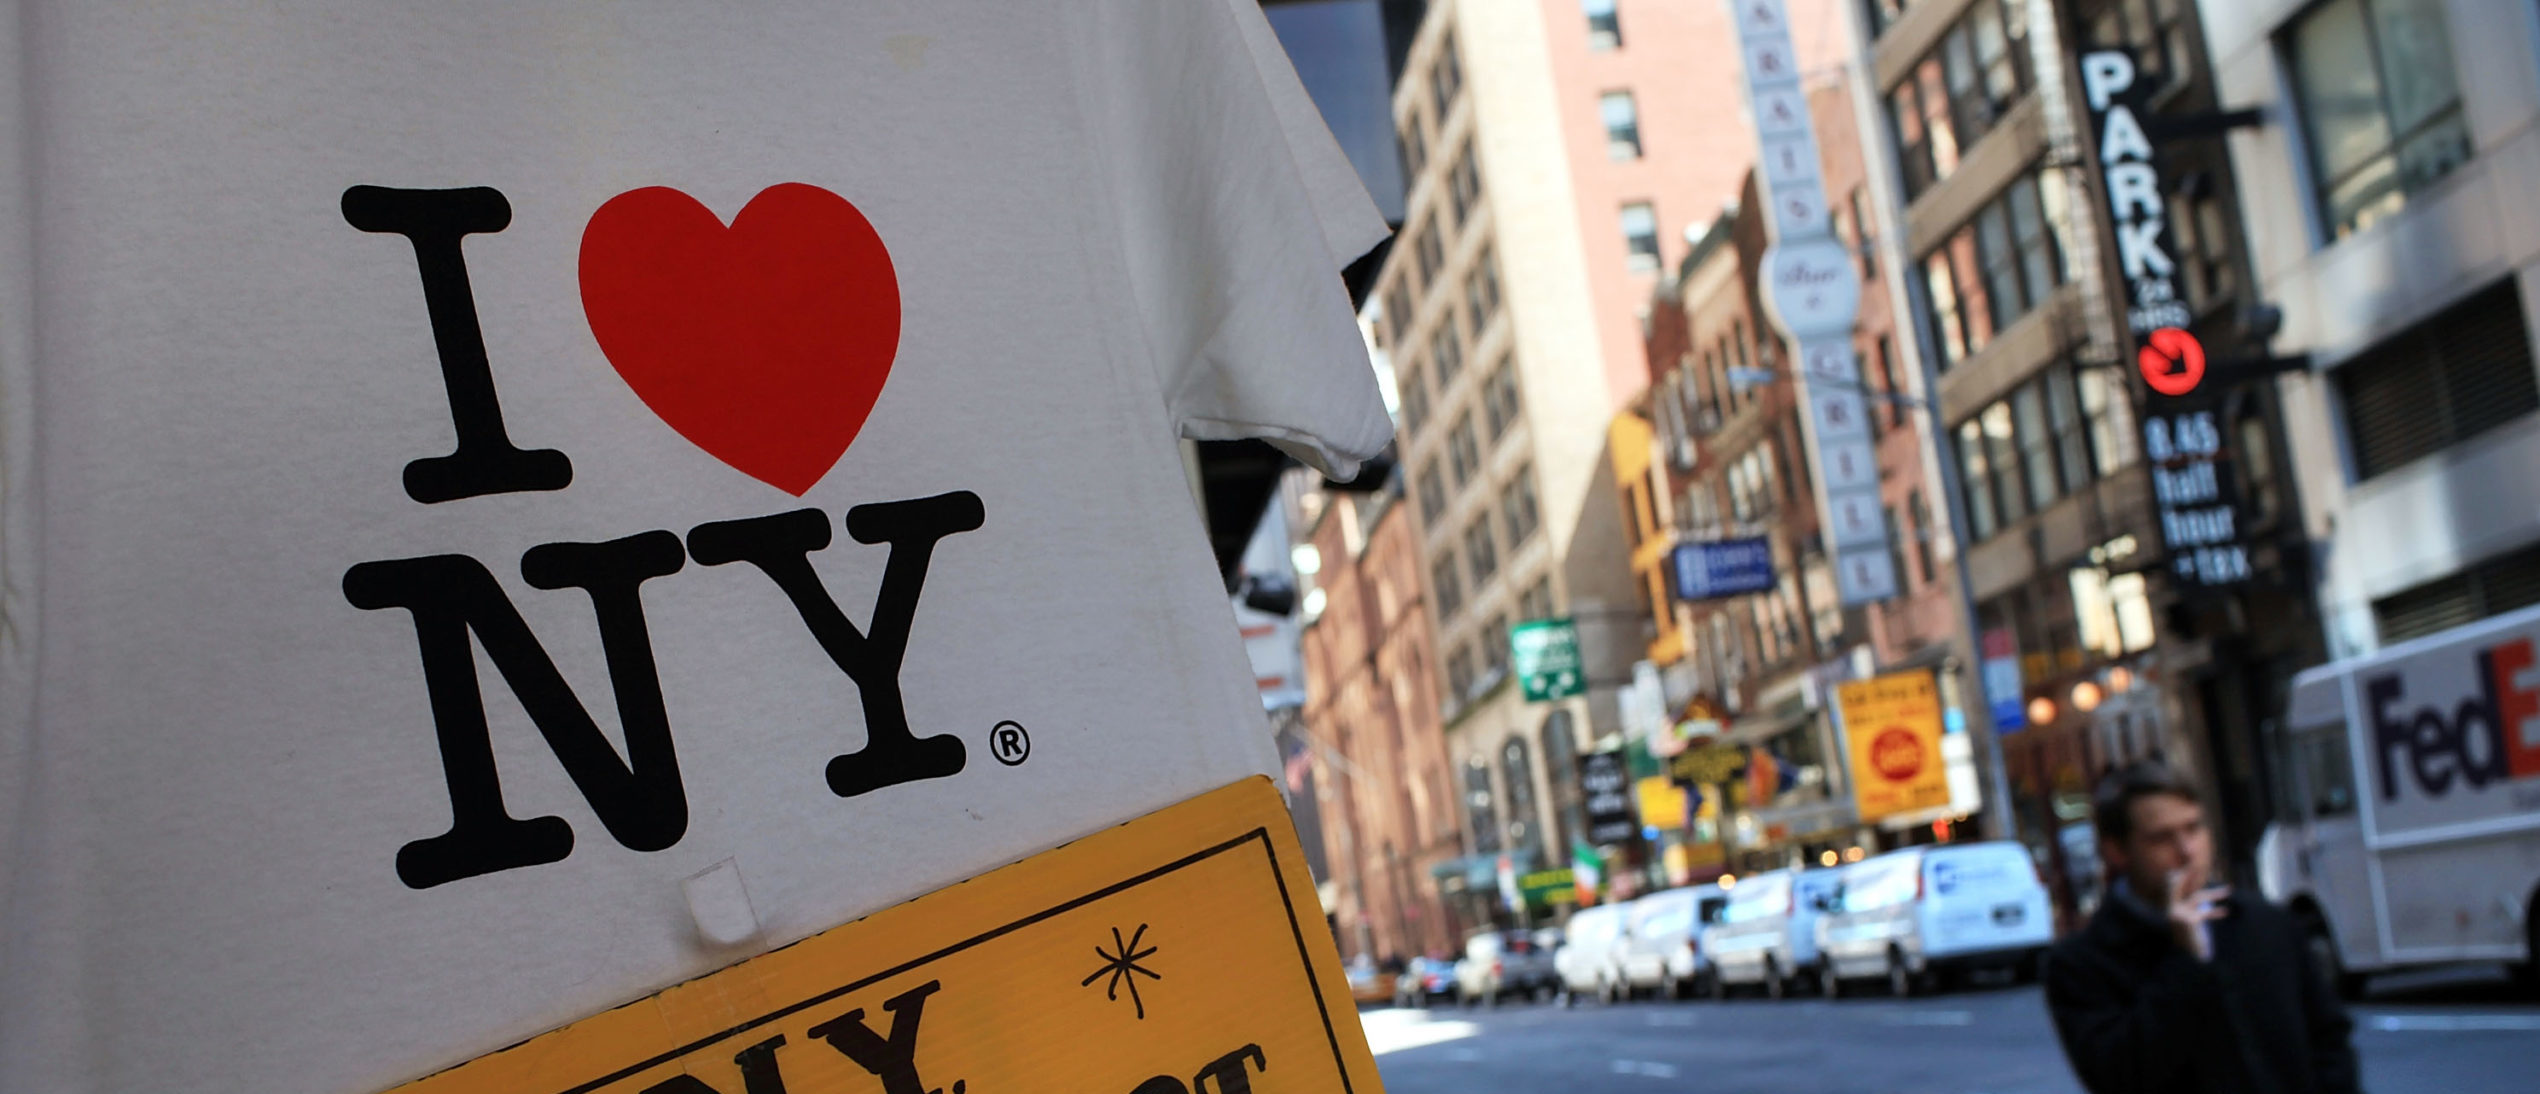 Энд ай лов. Милтон Глейзер i Love NY. Нью-Йорка (i Love NY). Бренд i Love New York. Надпись i Love NY.